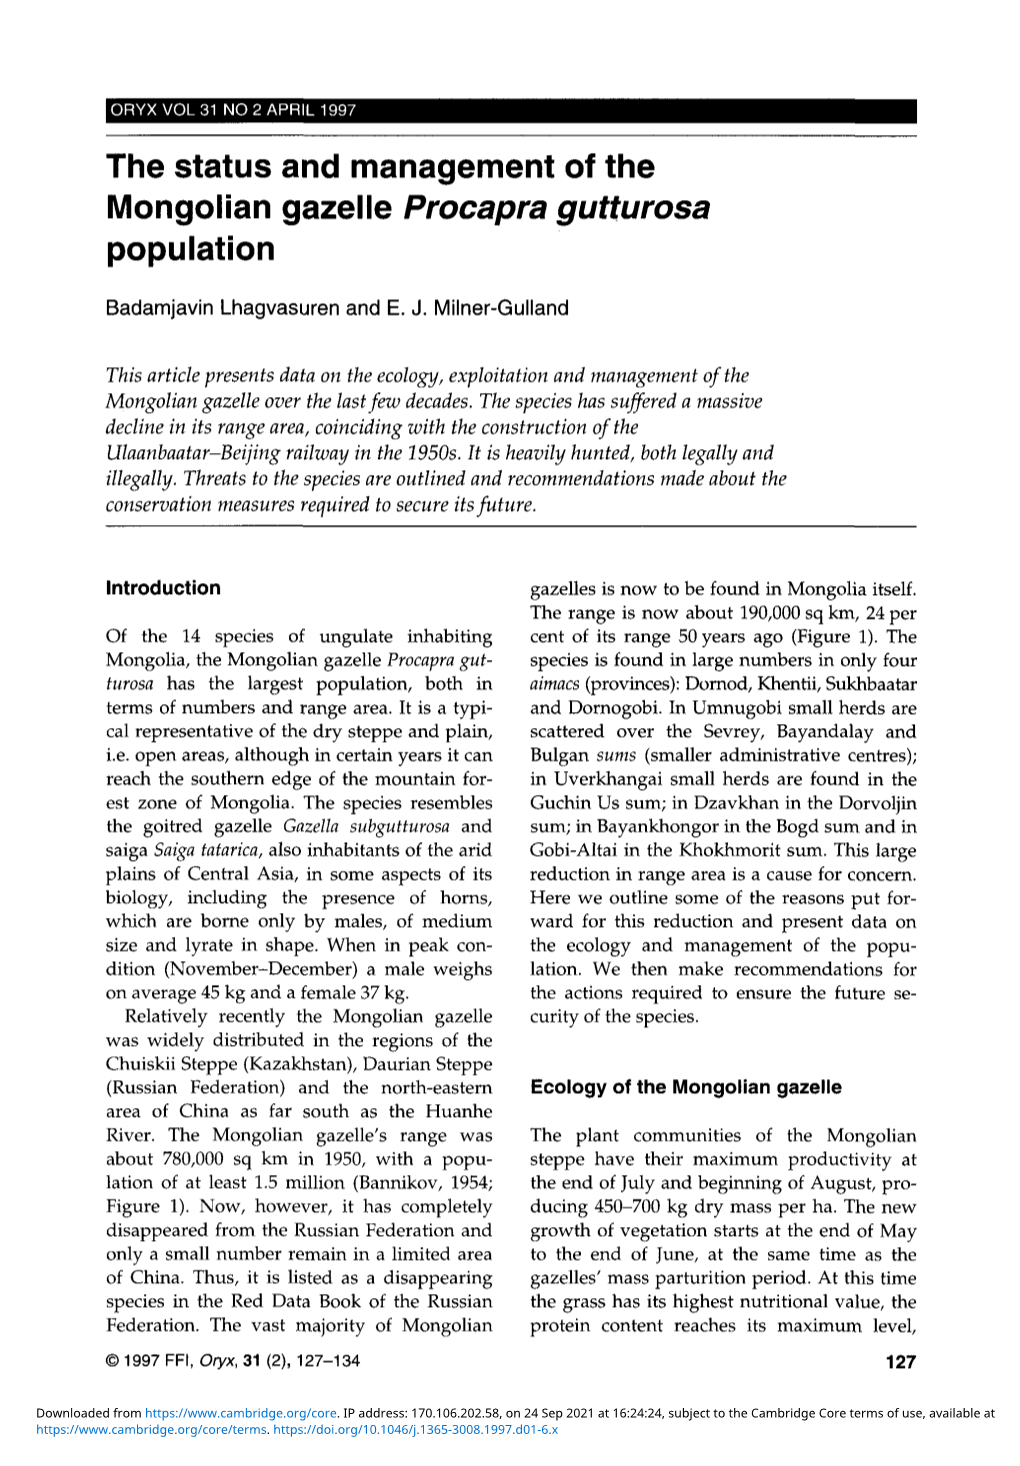 The Status and Management of the Mongolian Gazelle Procapra Gutturosa Population